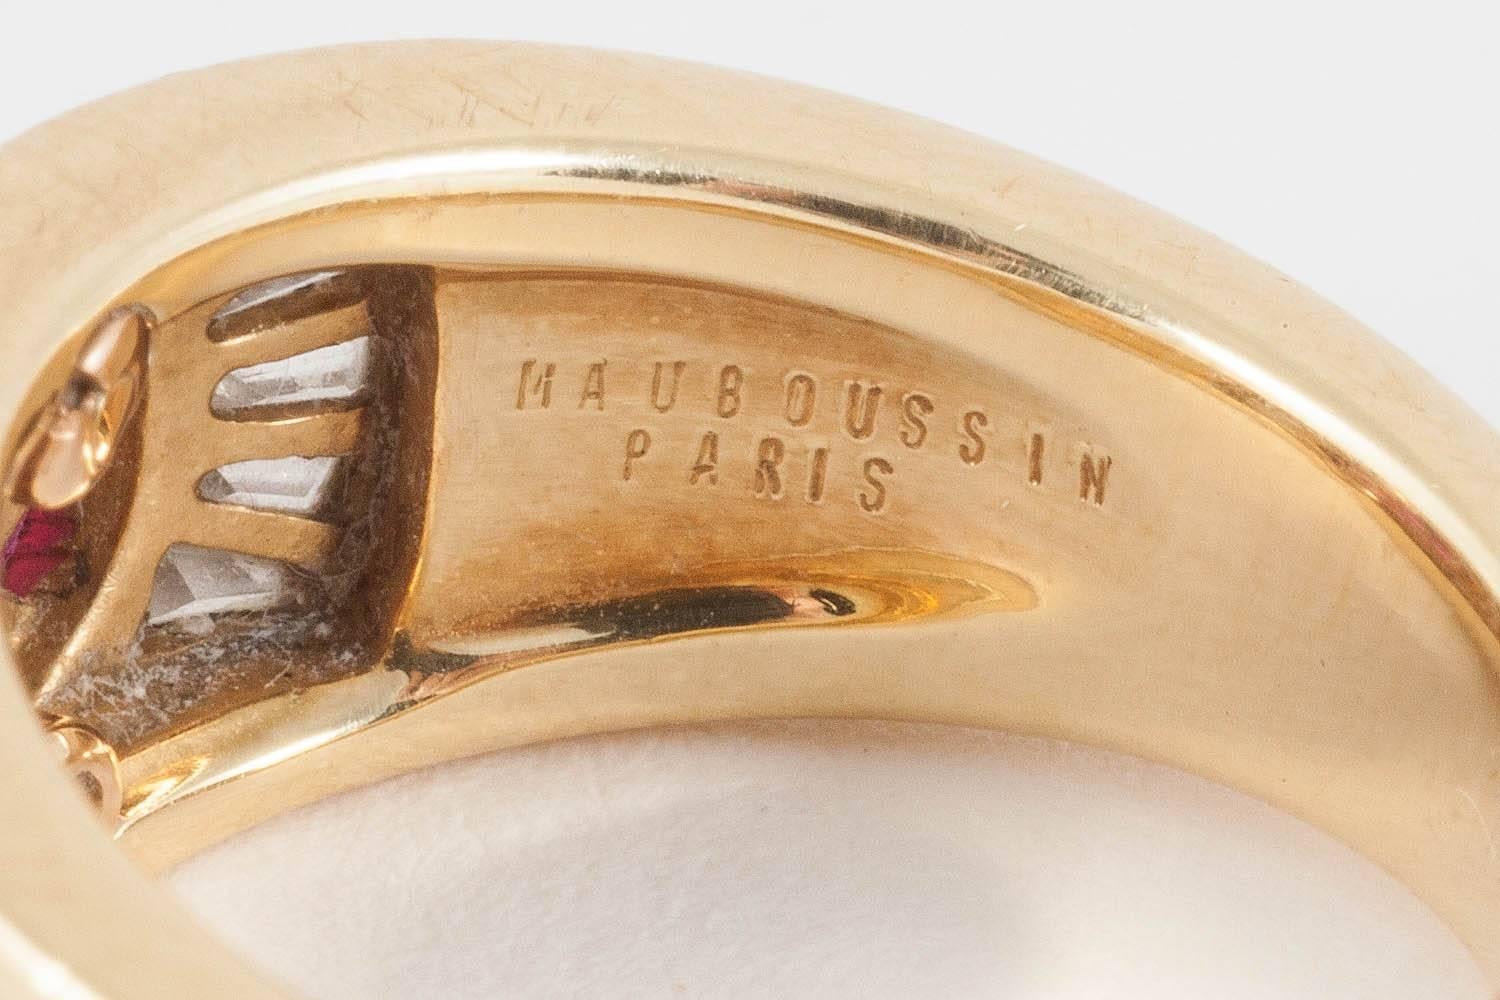 Baguette Cut Mauboussin Paris Ruby Diamond Mother-of-Pearl Ring